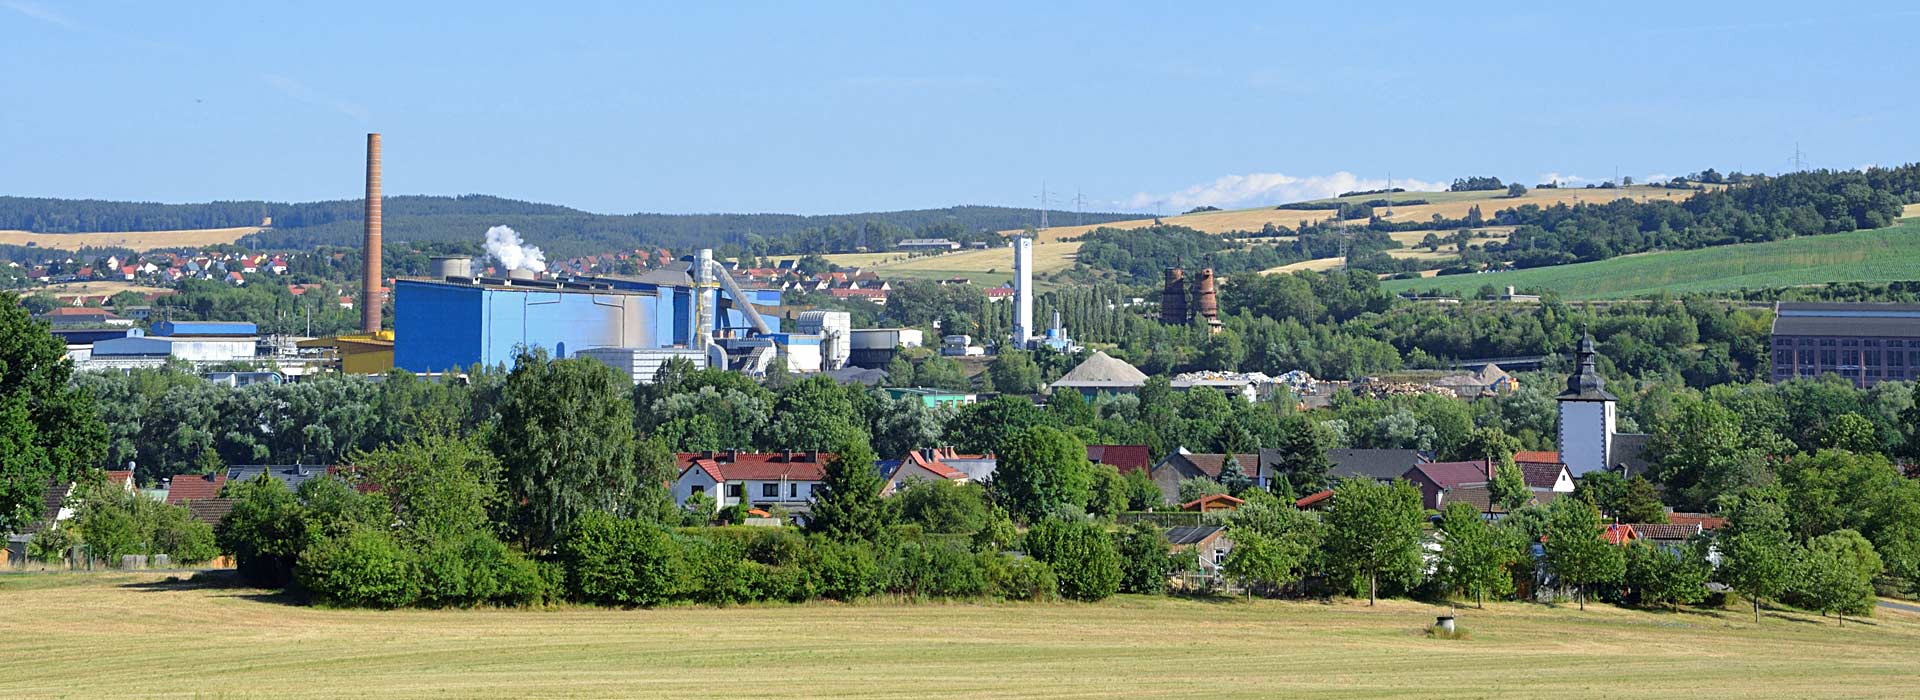 Stahlwerk Thüringen - Großindustrie in Unterwellenborn